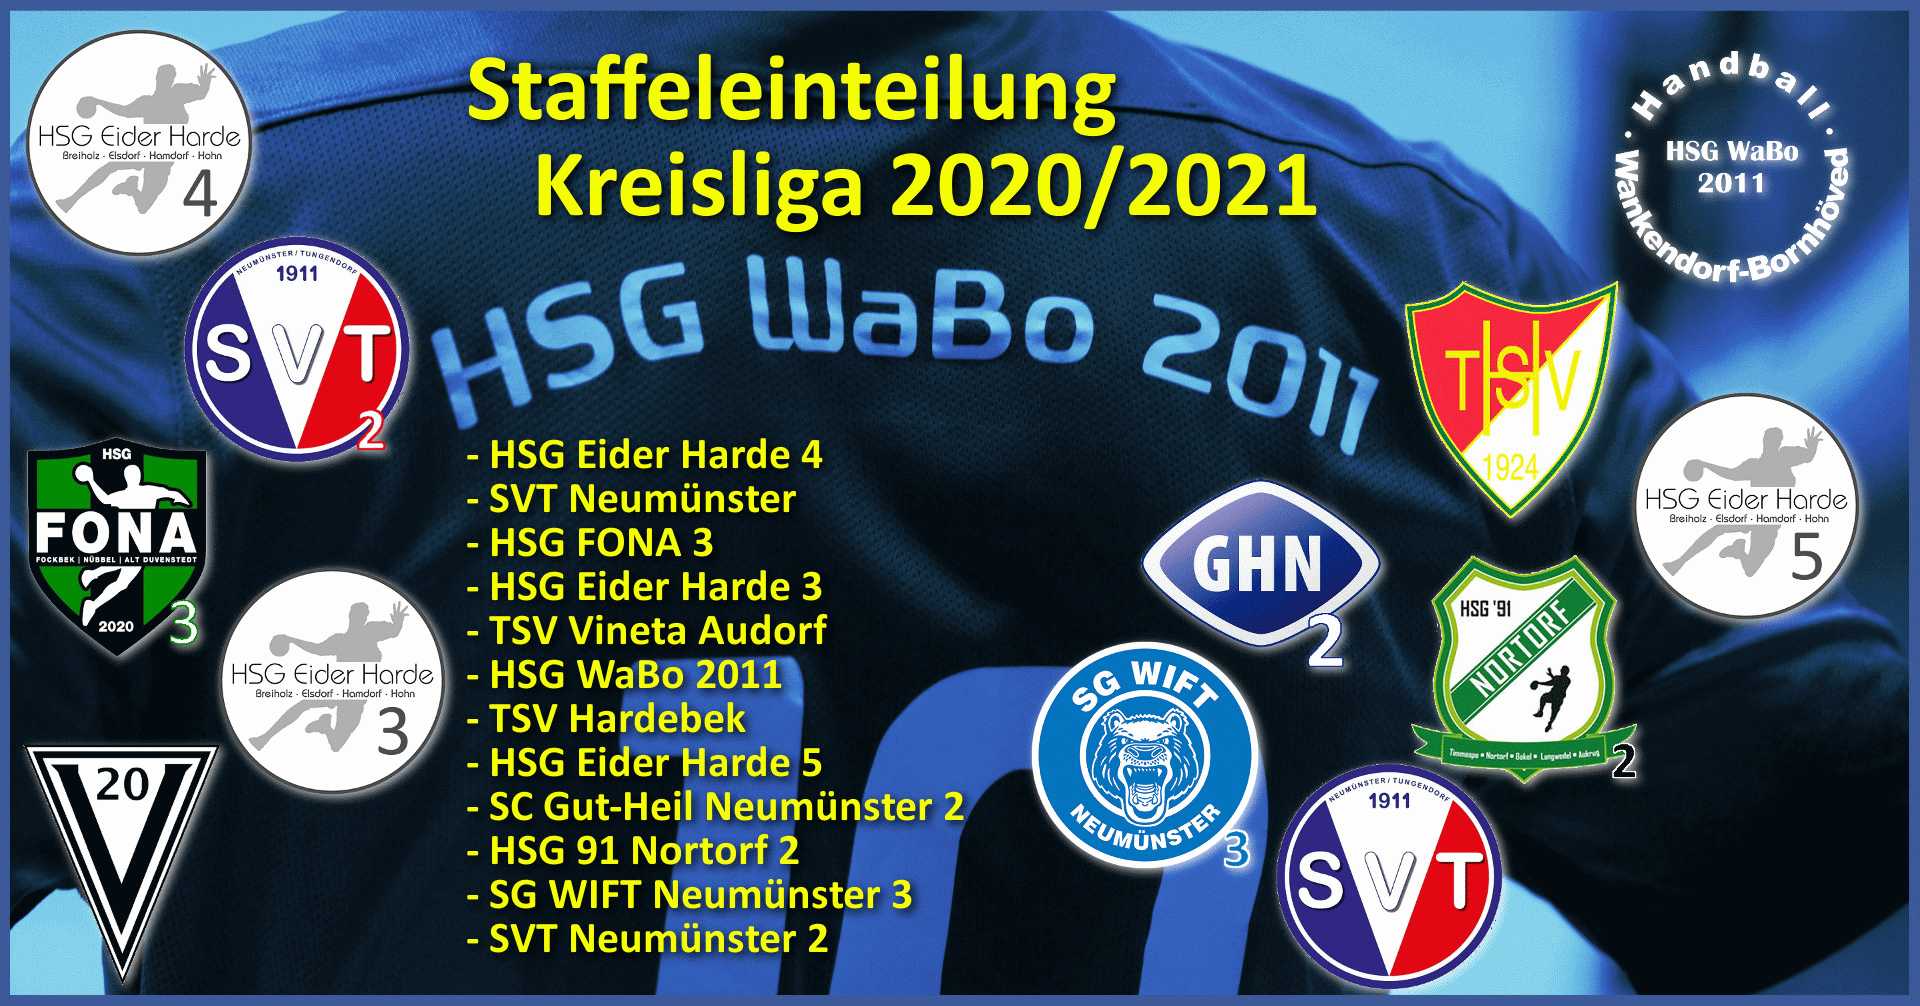 Staffeleinteilung Kreisliga Rendsburg Neumünster Saison 2020/2021